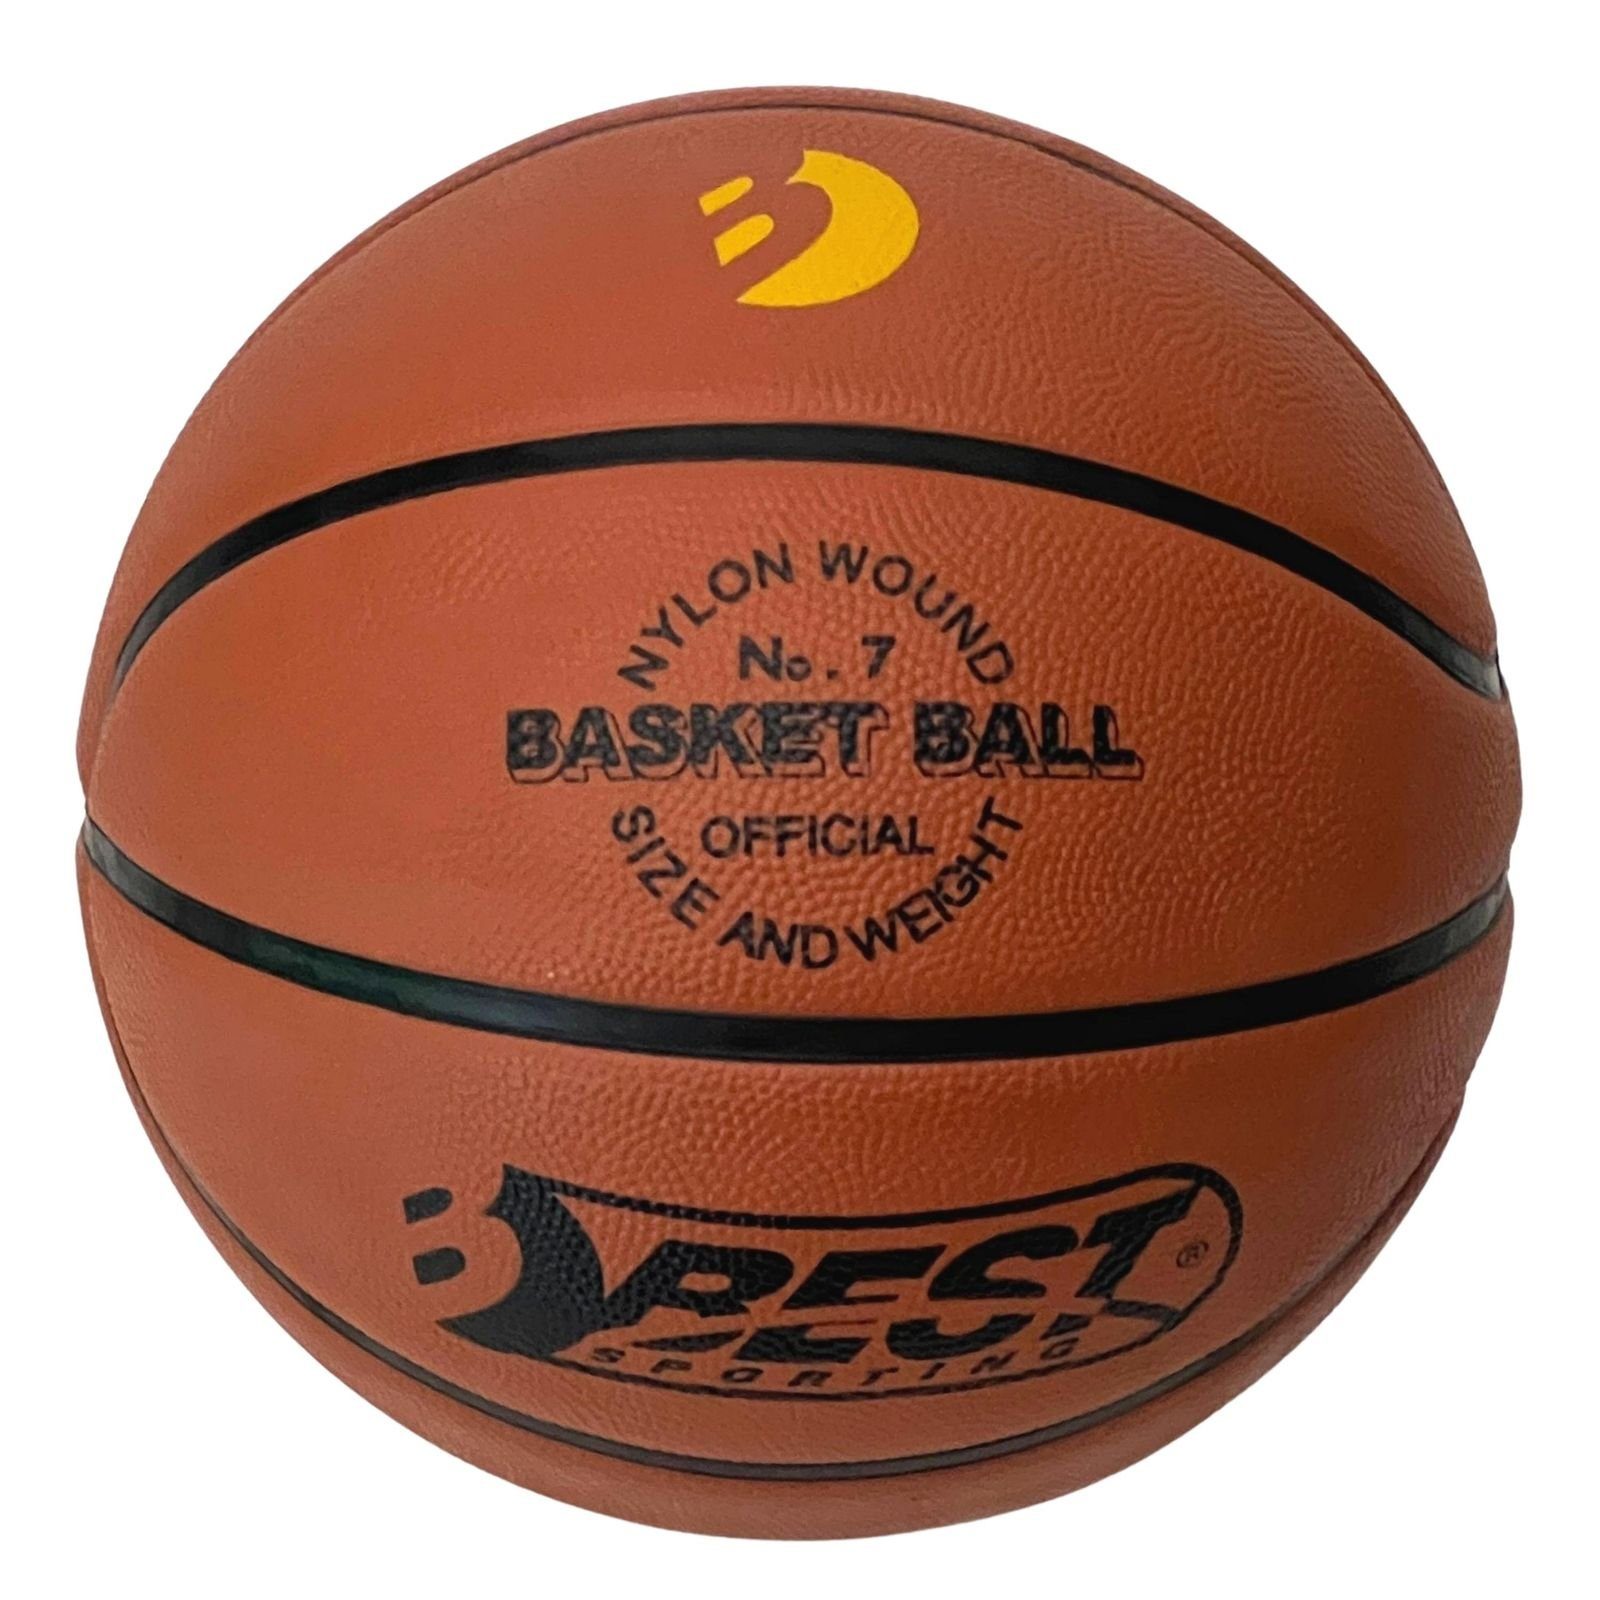 Best Sporting Basketball Hochwertiger Basketball Outdoor Größe 7, Basketball mit offiziellem Gewicht & Größe | Sportbälle